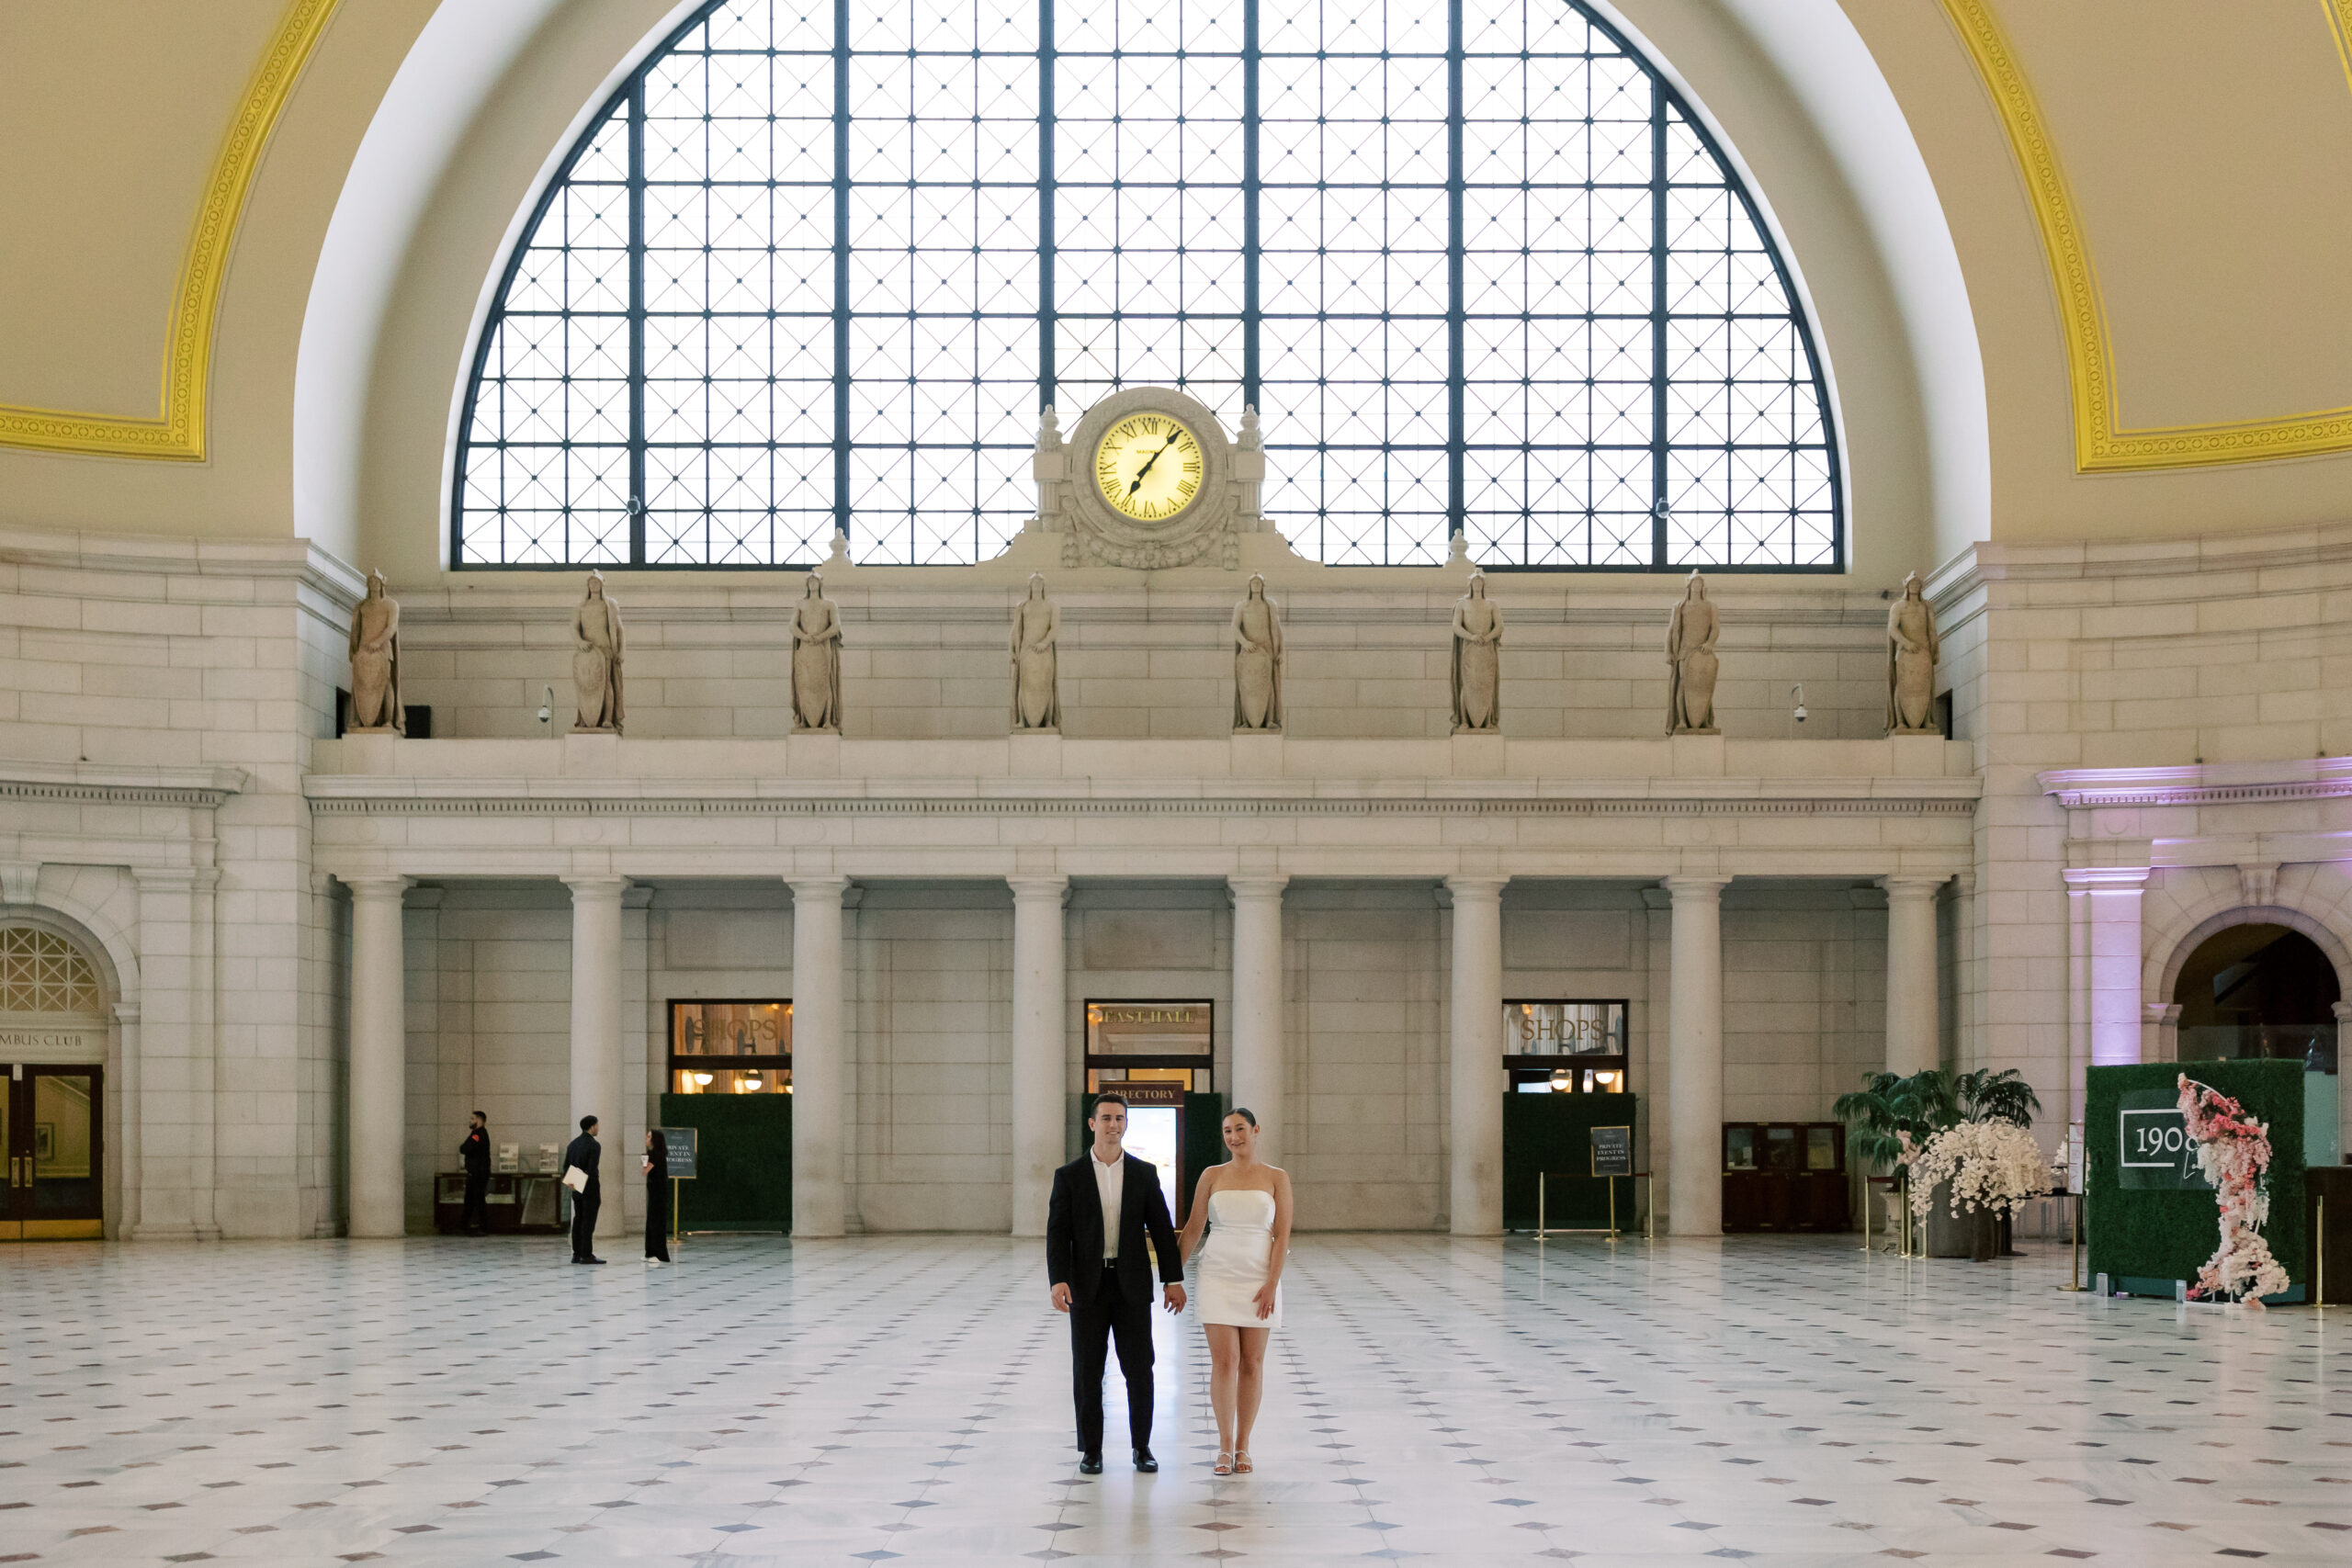 Engagement photos at DC Union Station captured by DMV wedding photographers